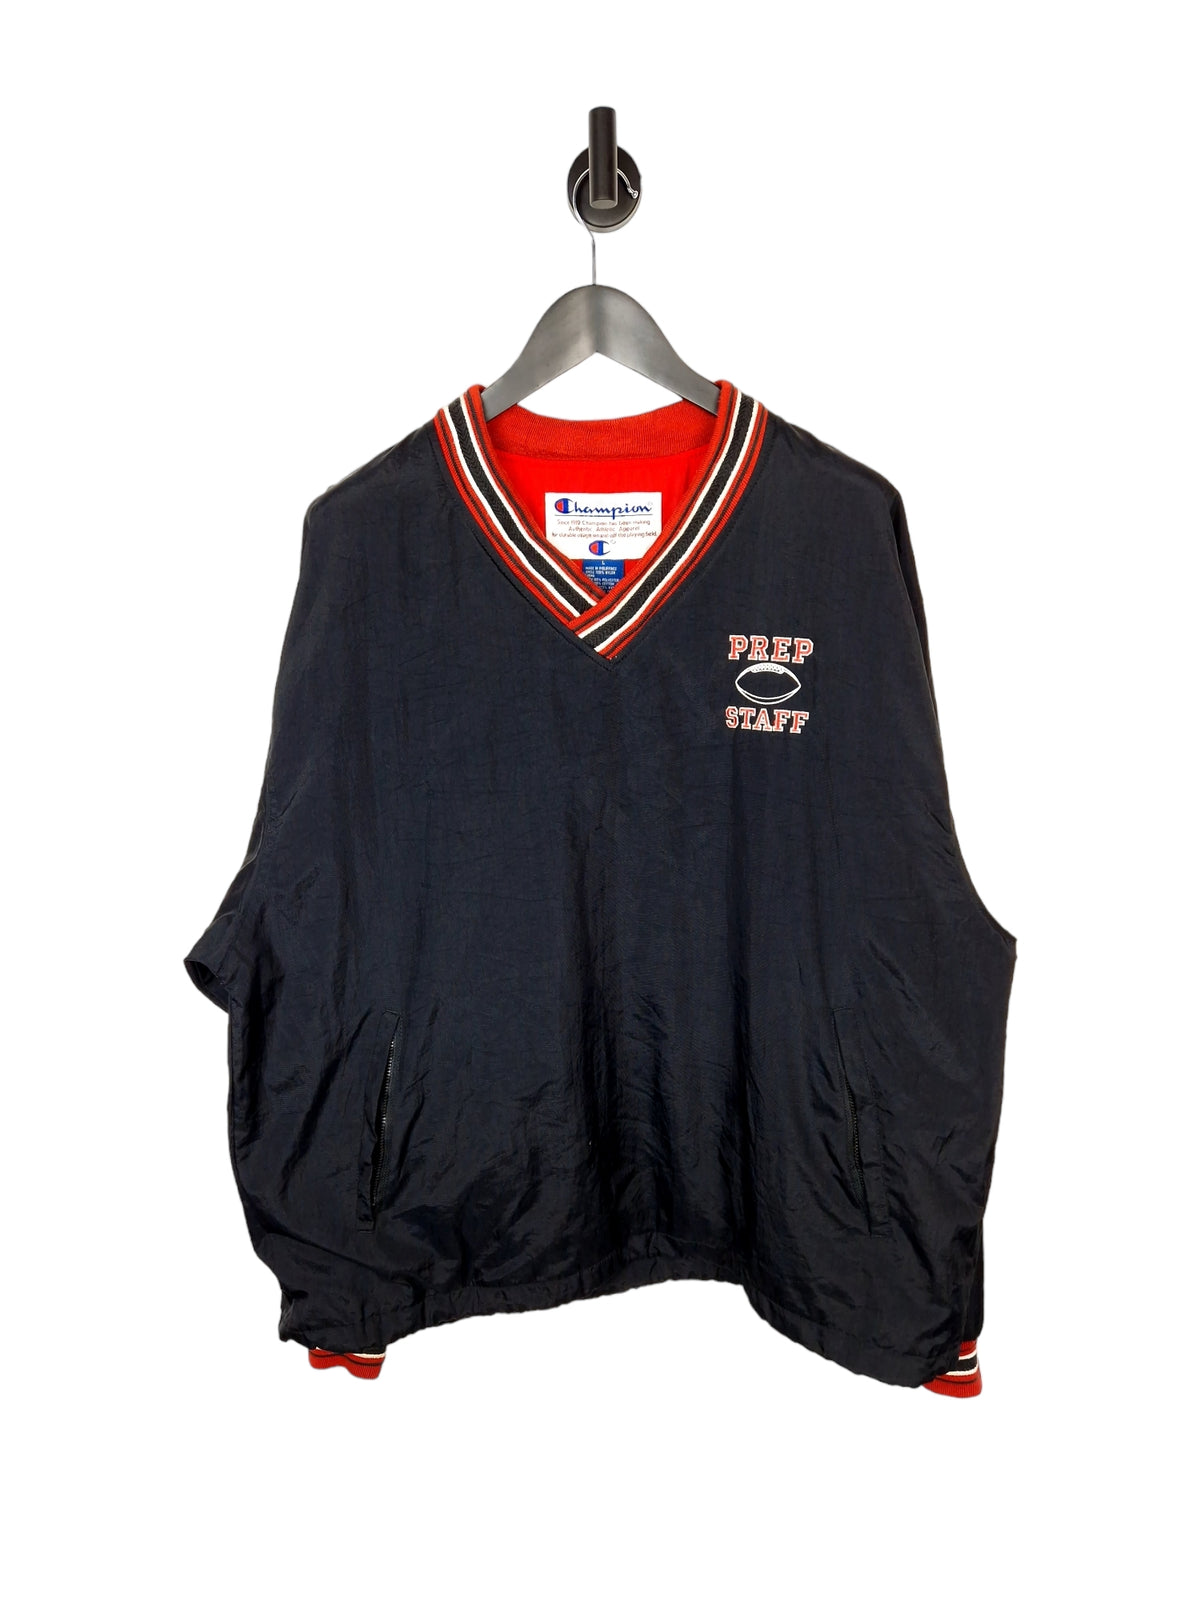 Vintage Champion Prep Team Pullover - Size XL